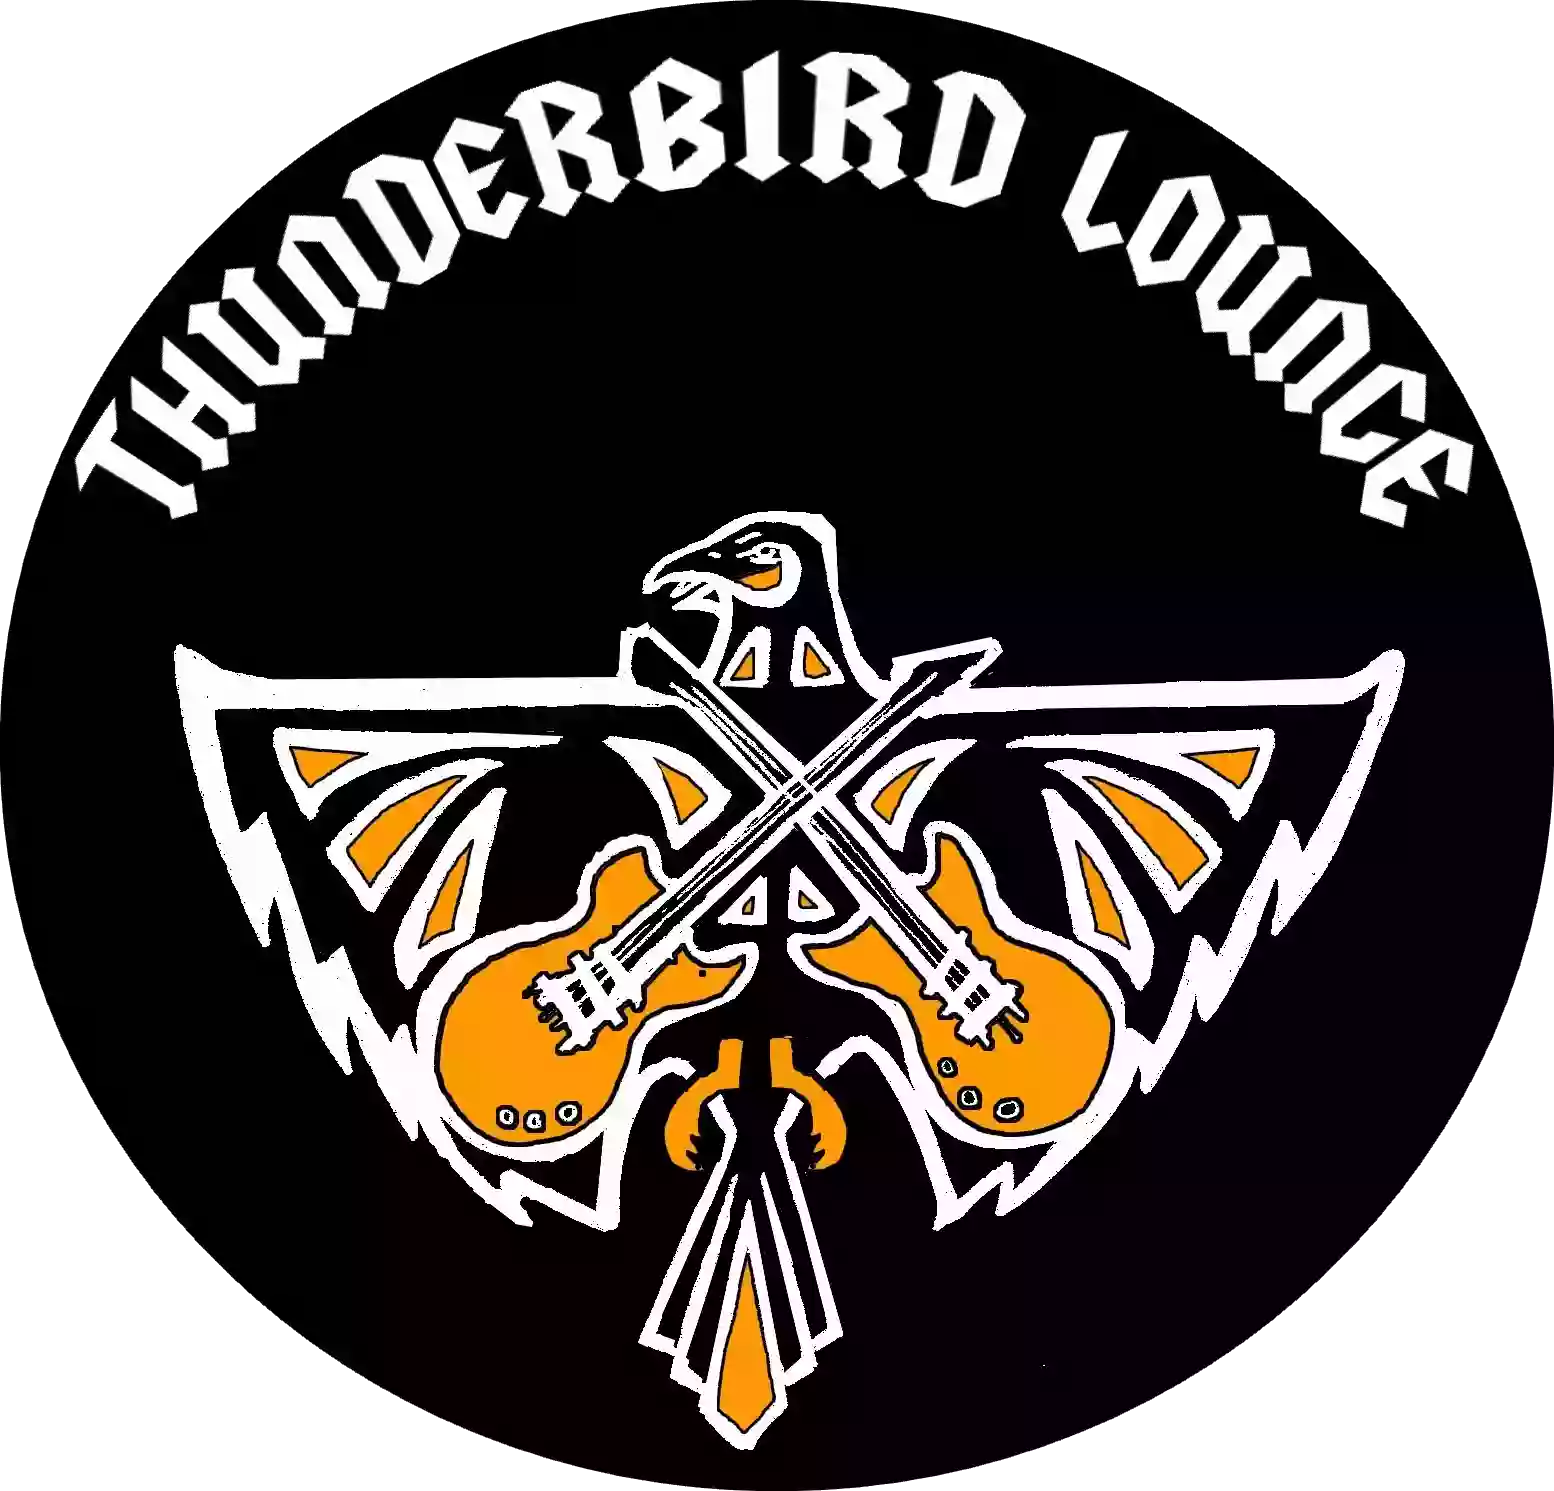 Thunderbird Lounge